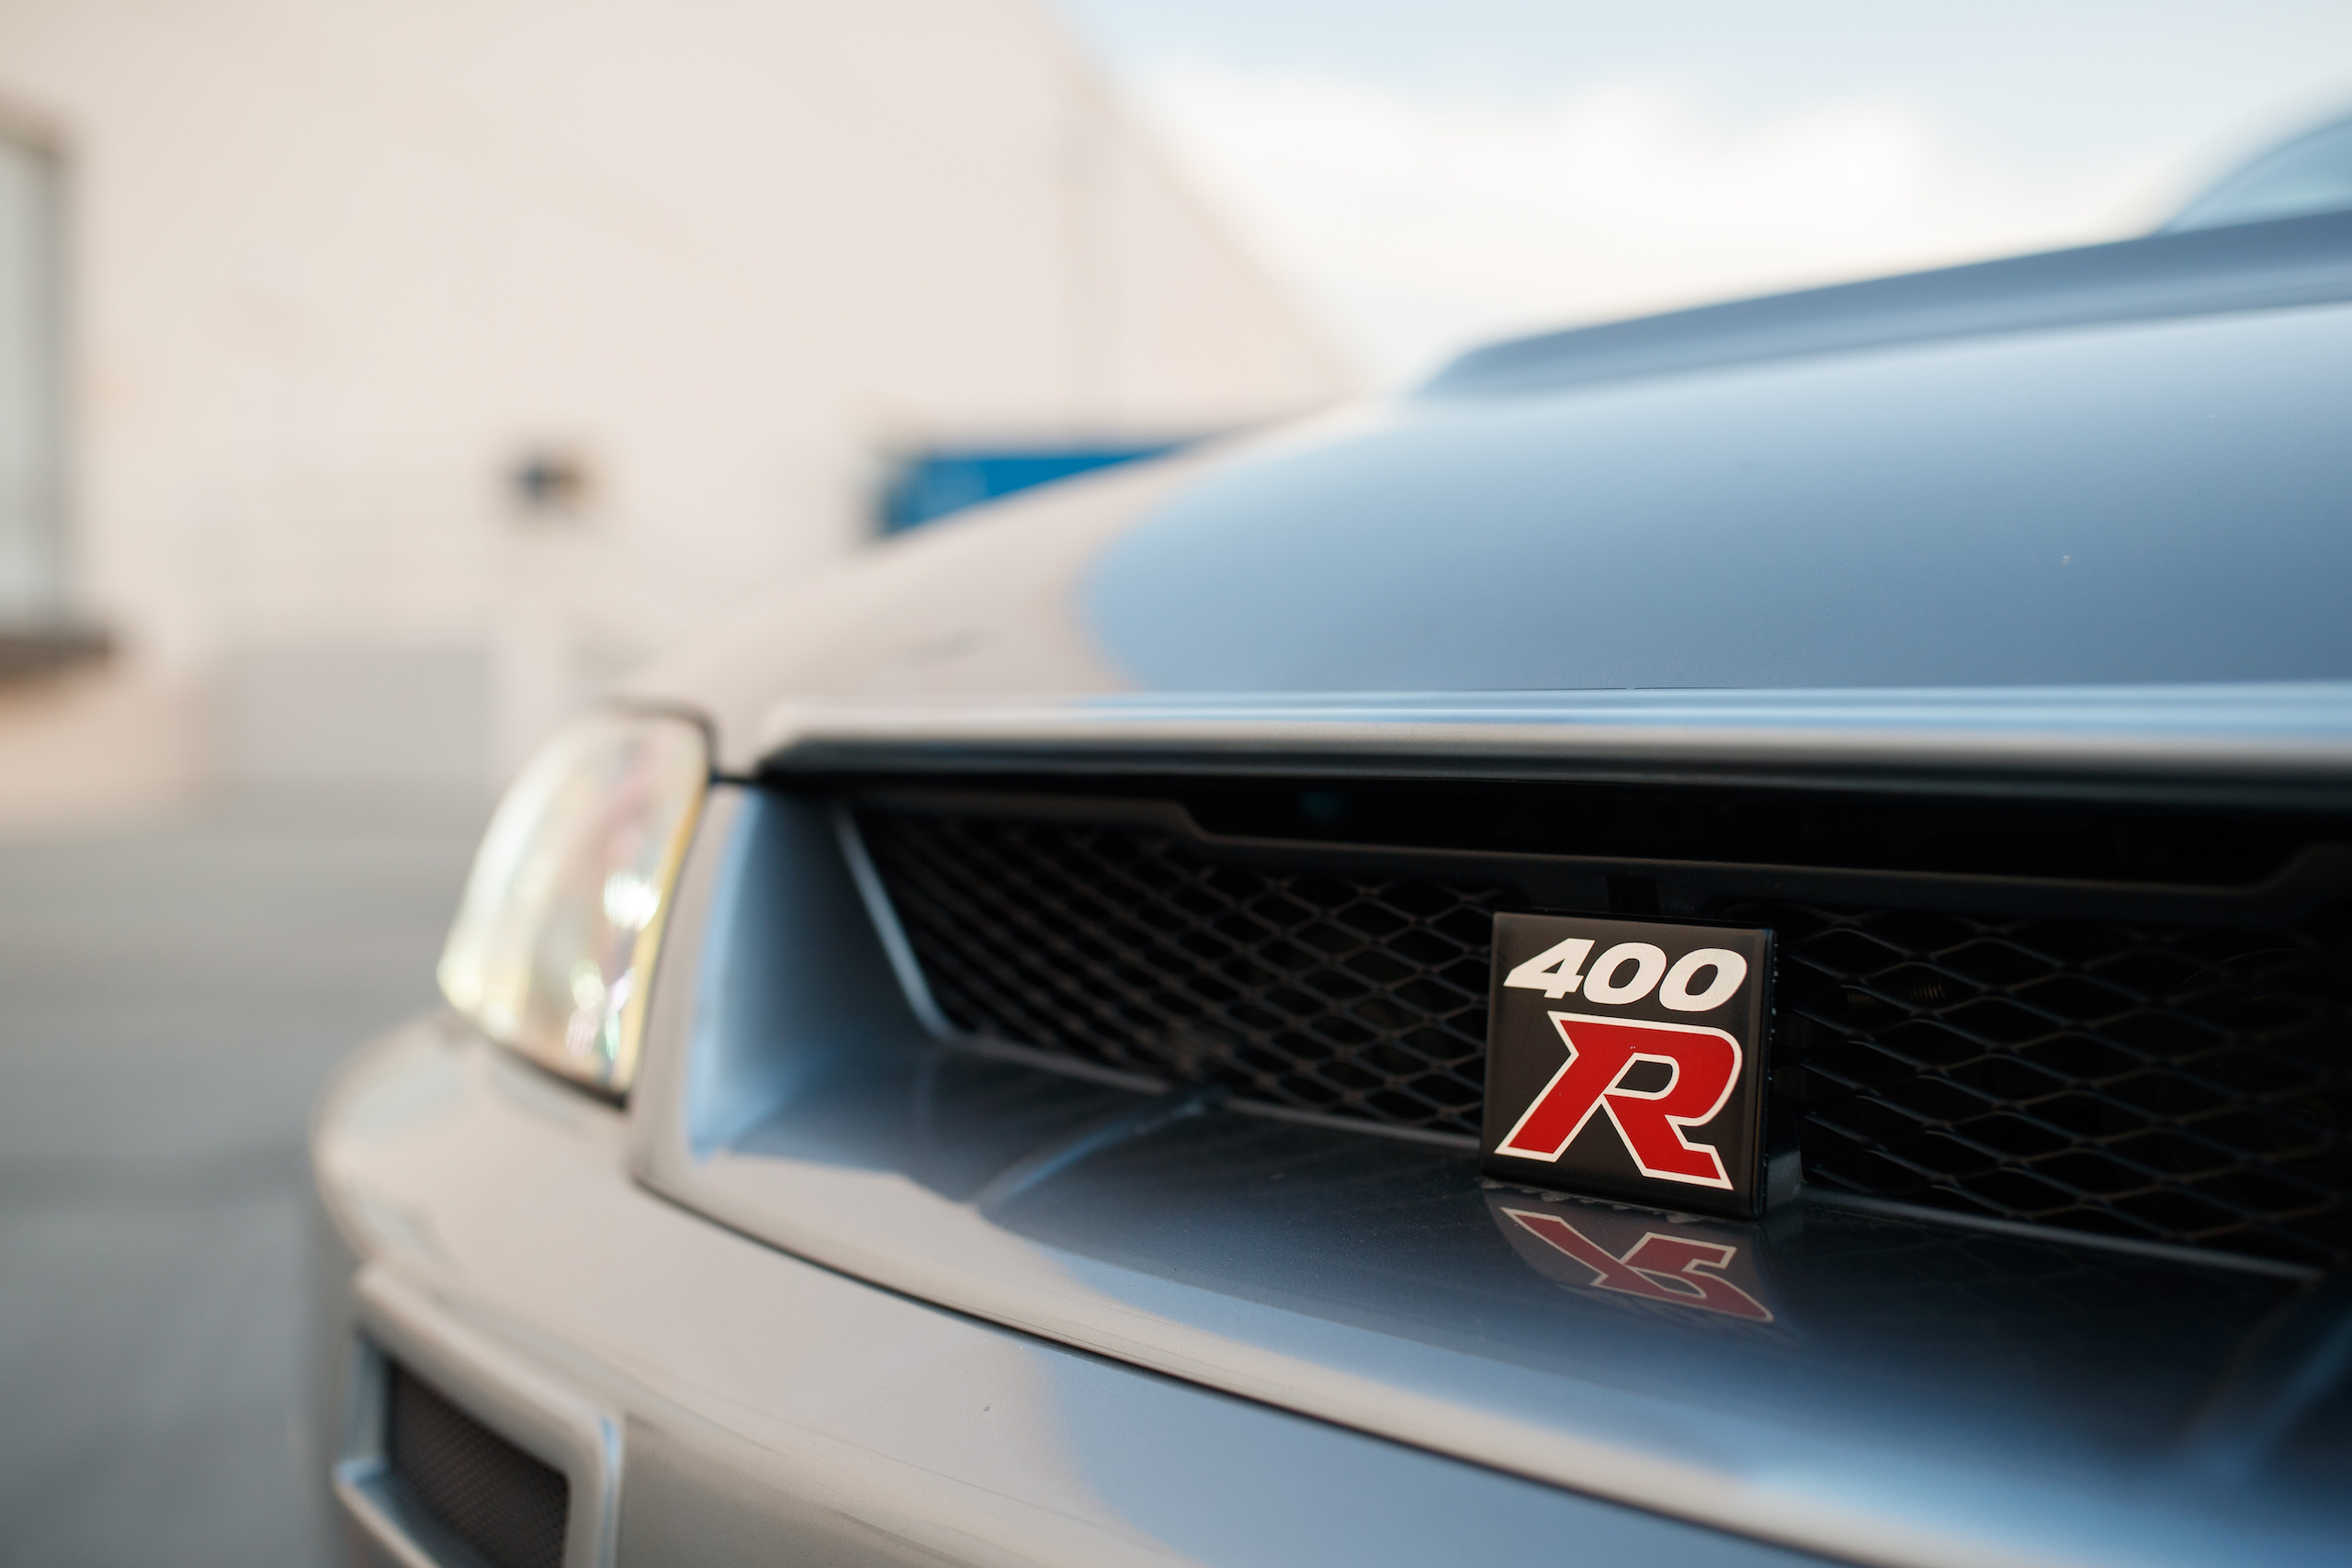 Skyline GT-R NISMO 400R front end logo closeup